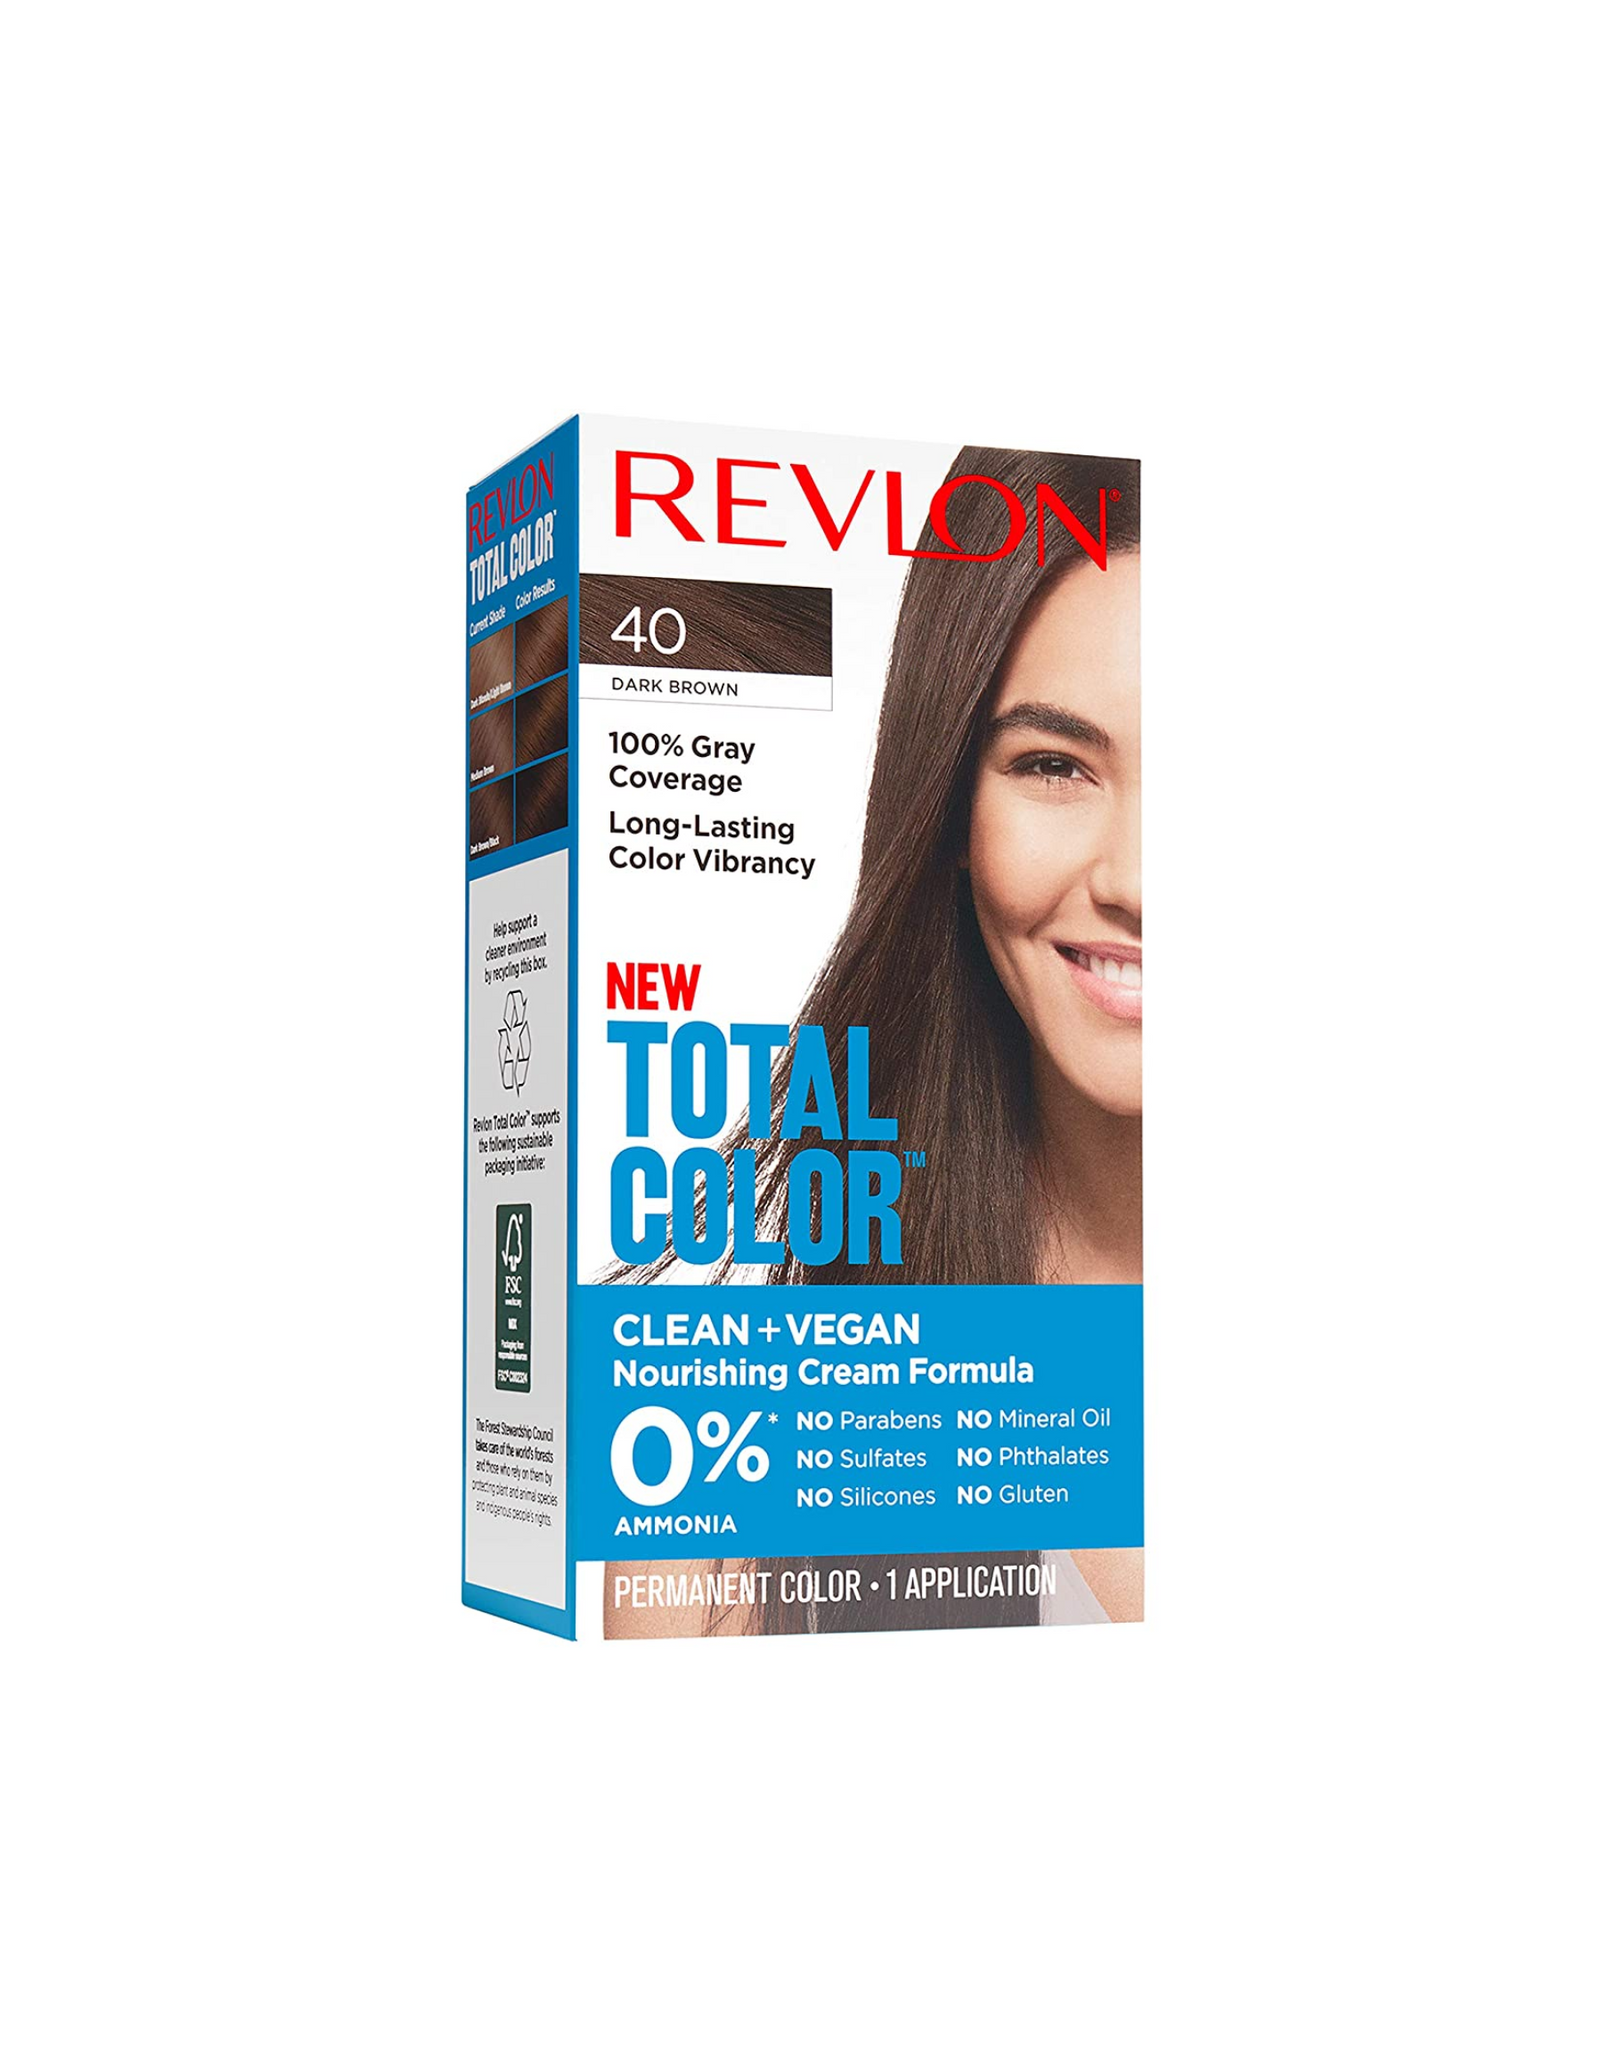 Permanent Hair Color by Revlon, 100% Gray Coverage, Long-Lasting Color Vibrancy, 40 Dark Brown, 3.5 Oz